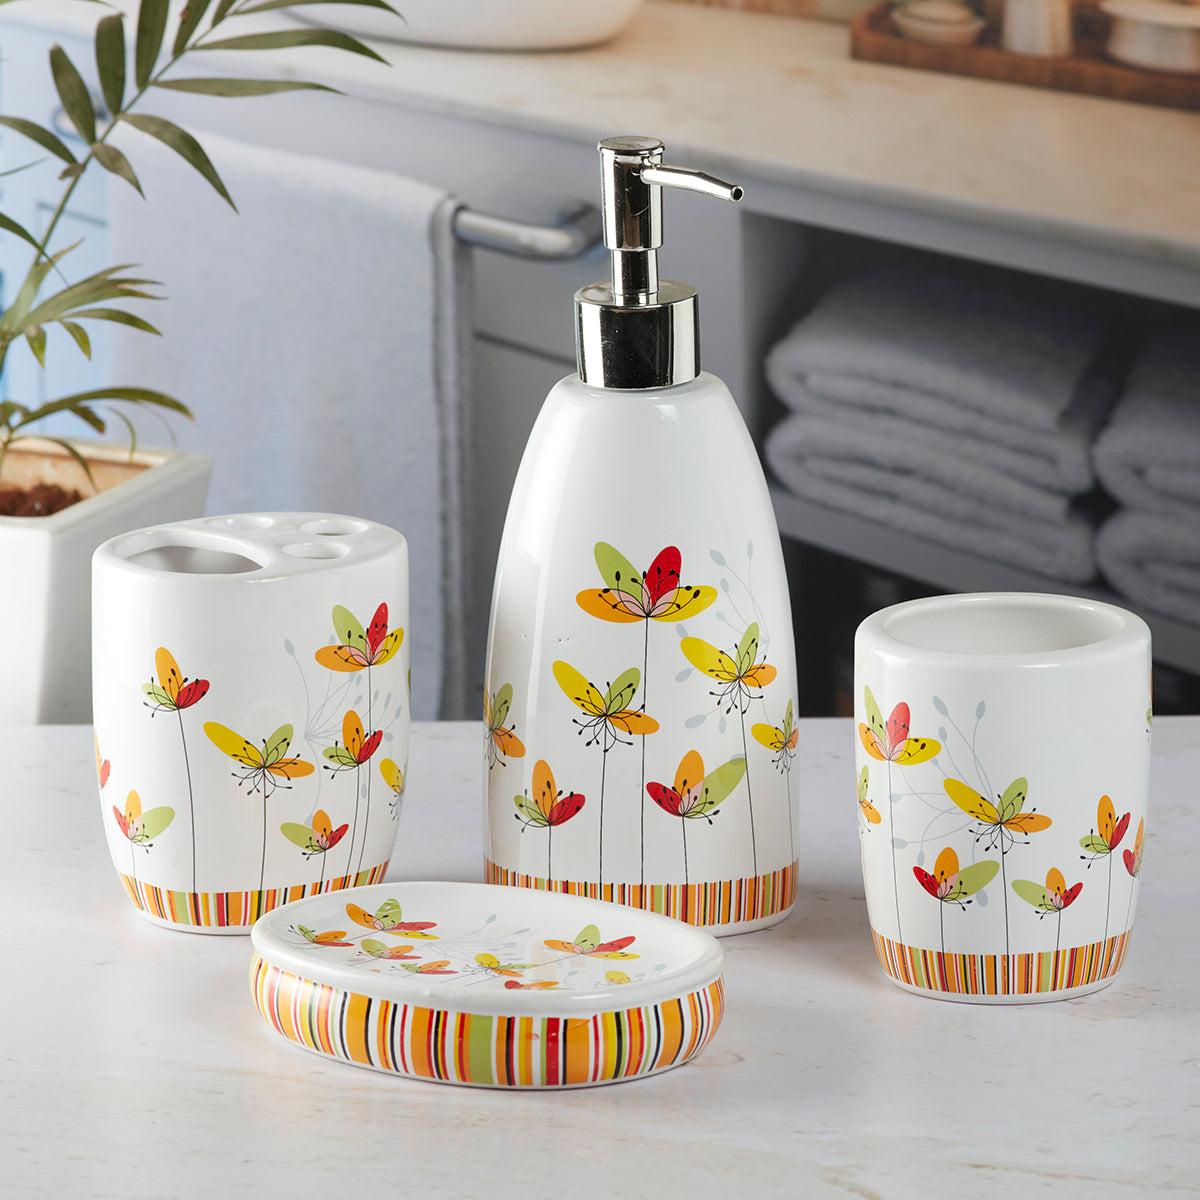 Ceramic Bathroom Accessories Set of 4 Bath Set with Soap Dispenser (9881)